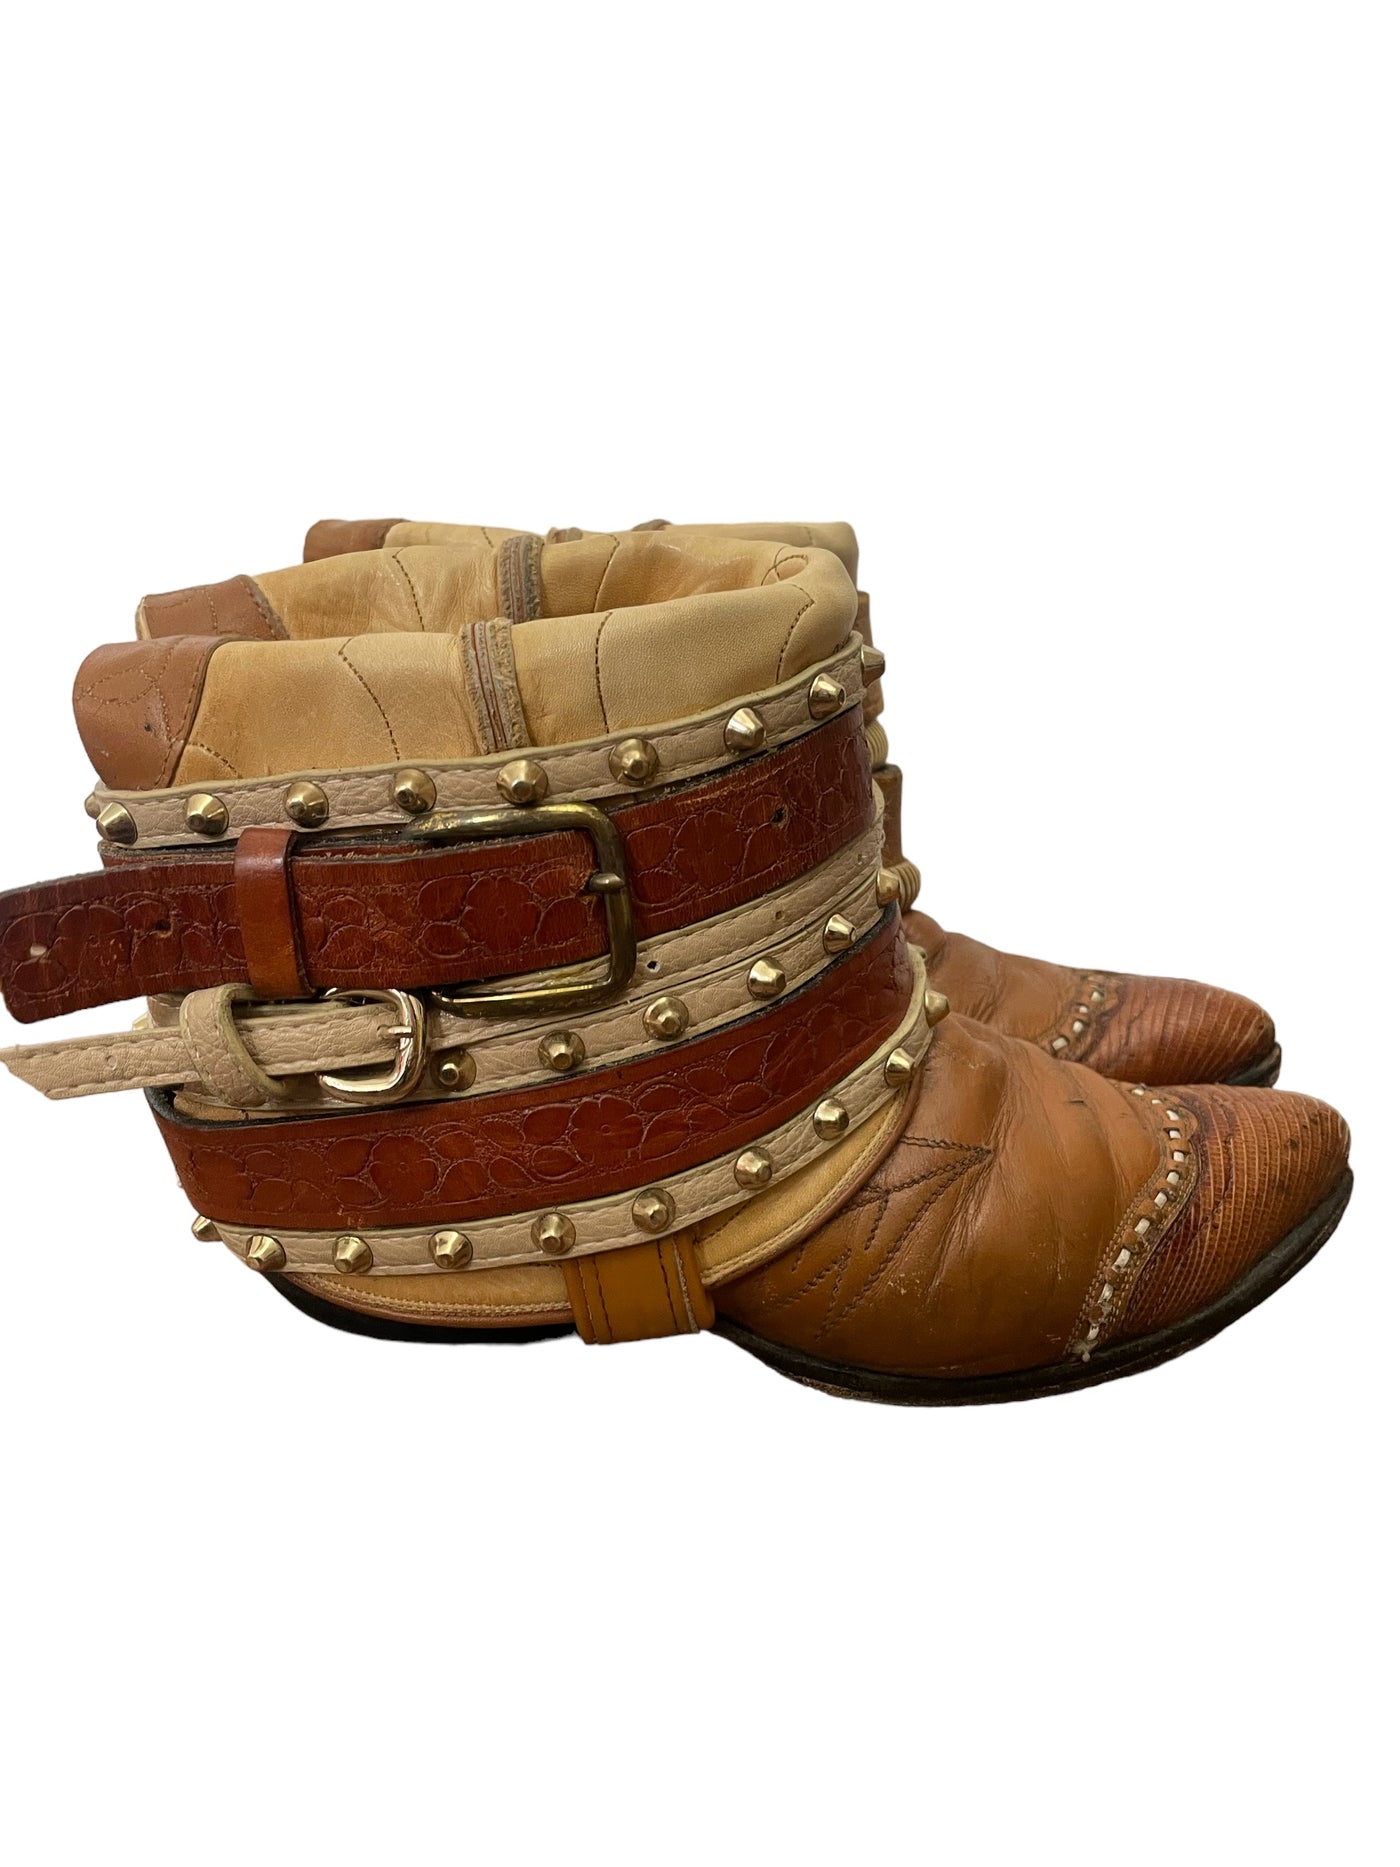 Luxury jones vintage leather boots size 38